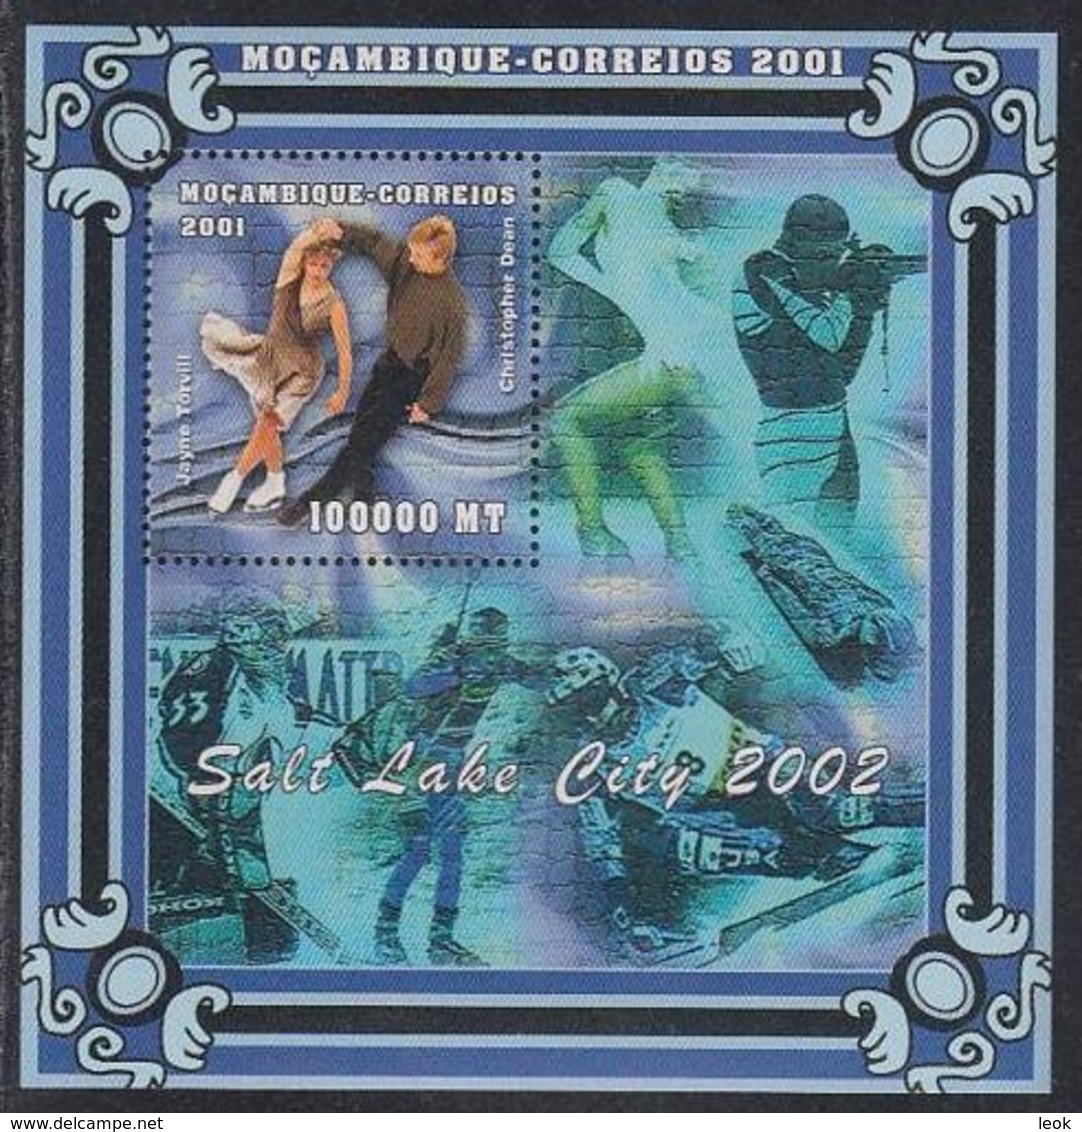 Salt Lake City 2002 Olympic Games Christopher Dean Mozambique MNH S/S Stamp 2001 - Hiver 2002: Salt Lake City